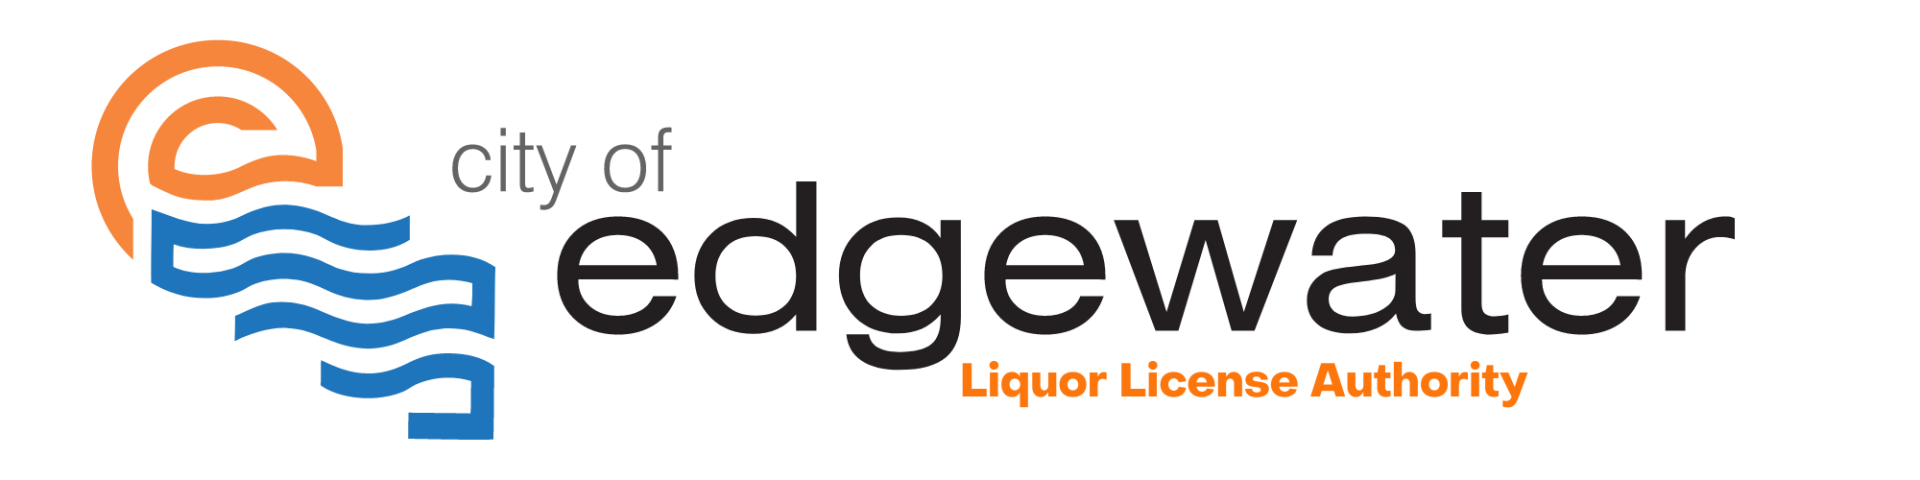 Liquor Authority Logo Header